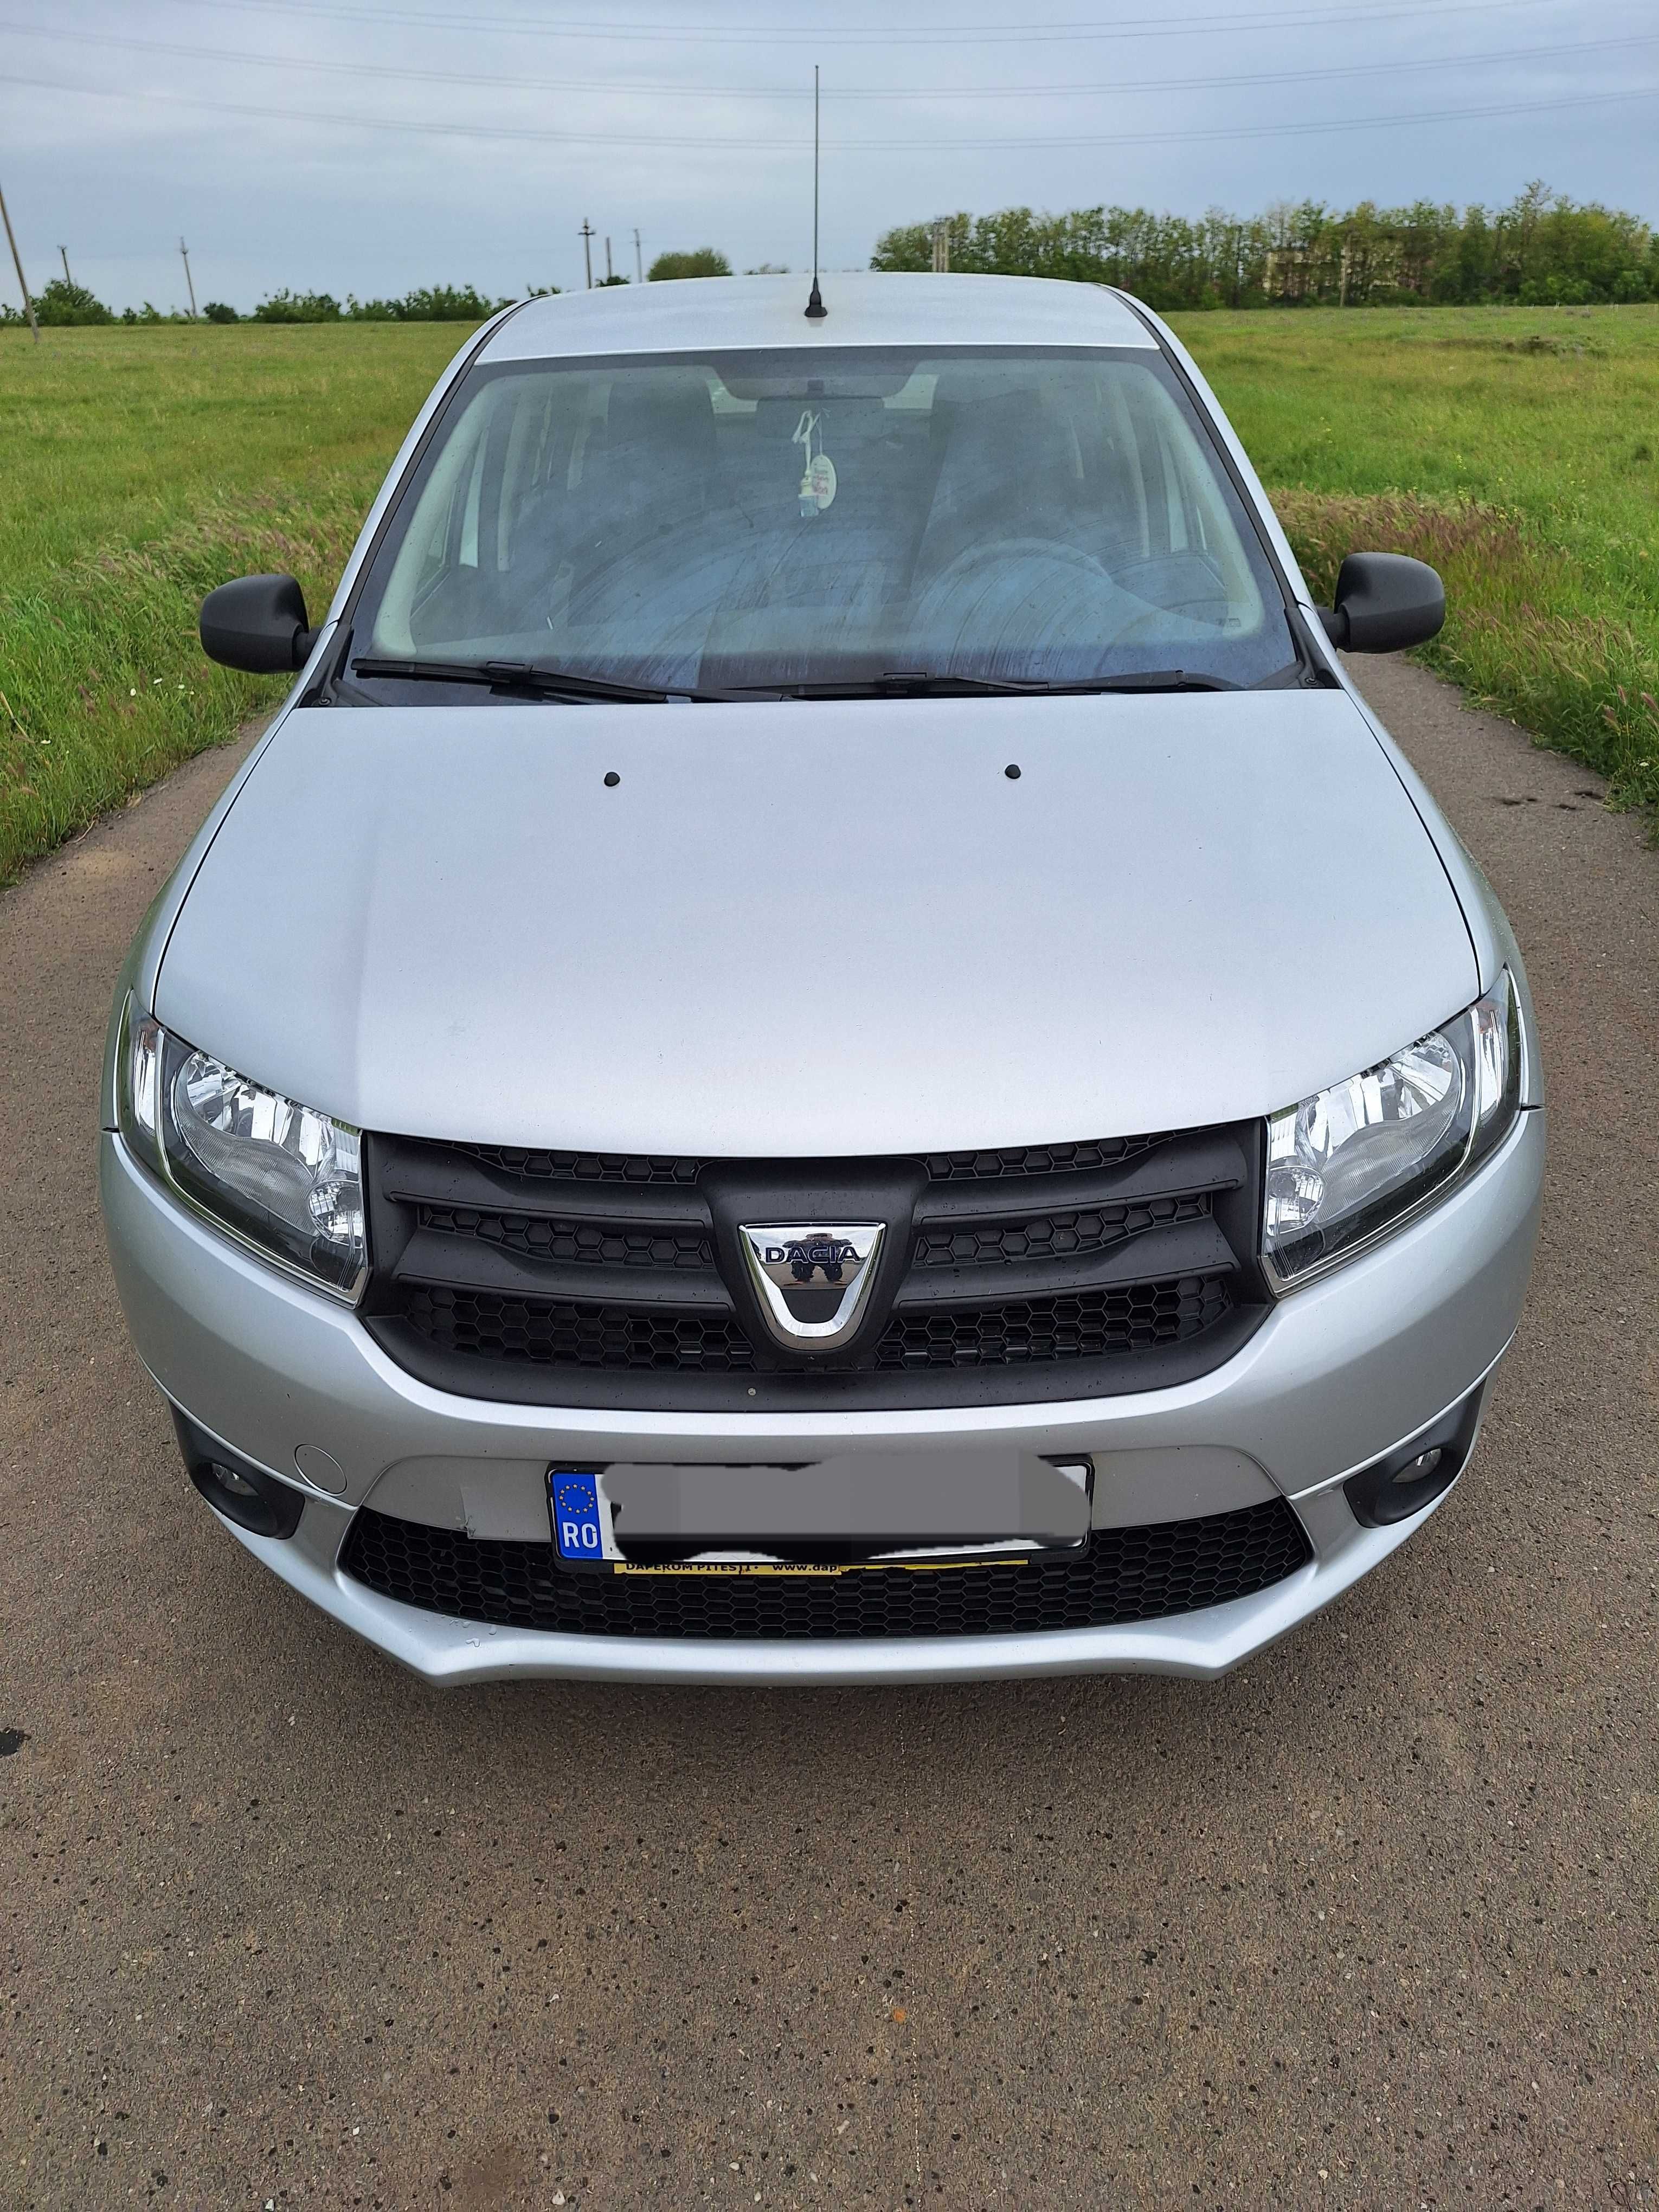 Dacia logan 2016 benzina